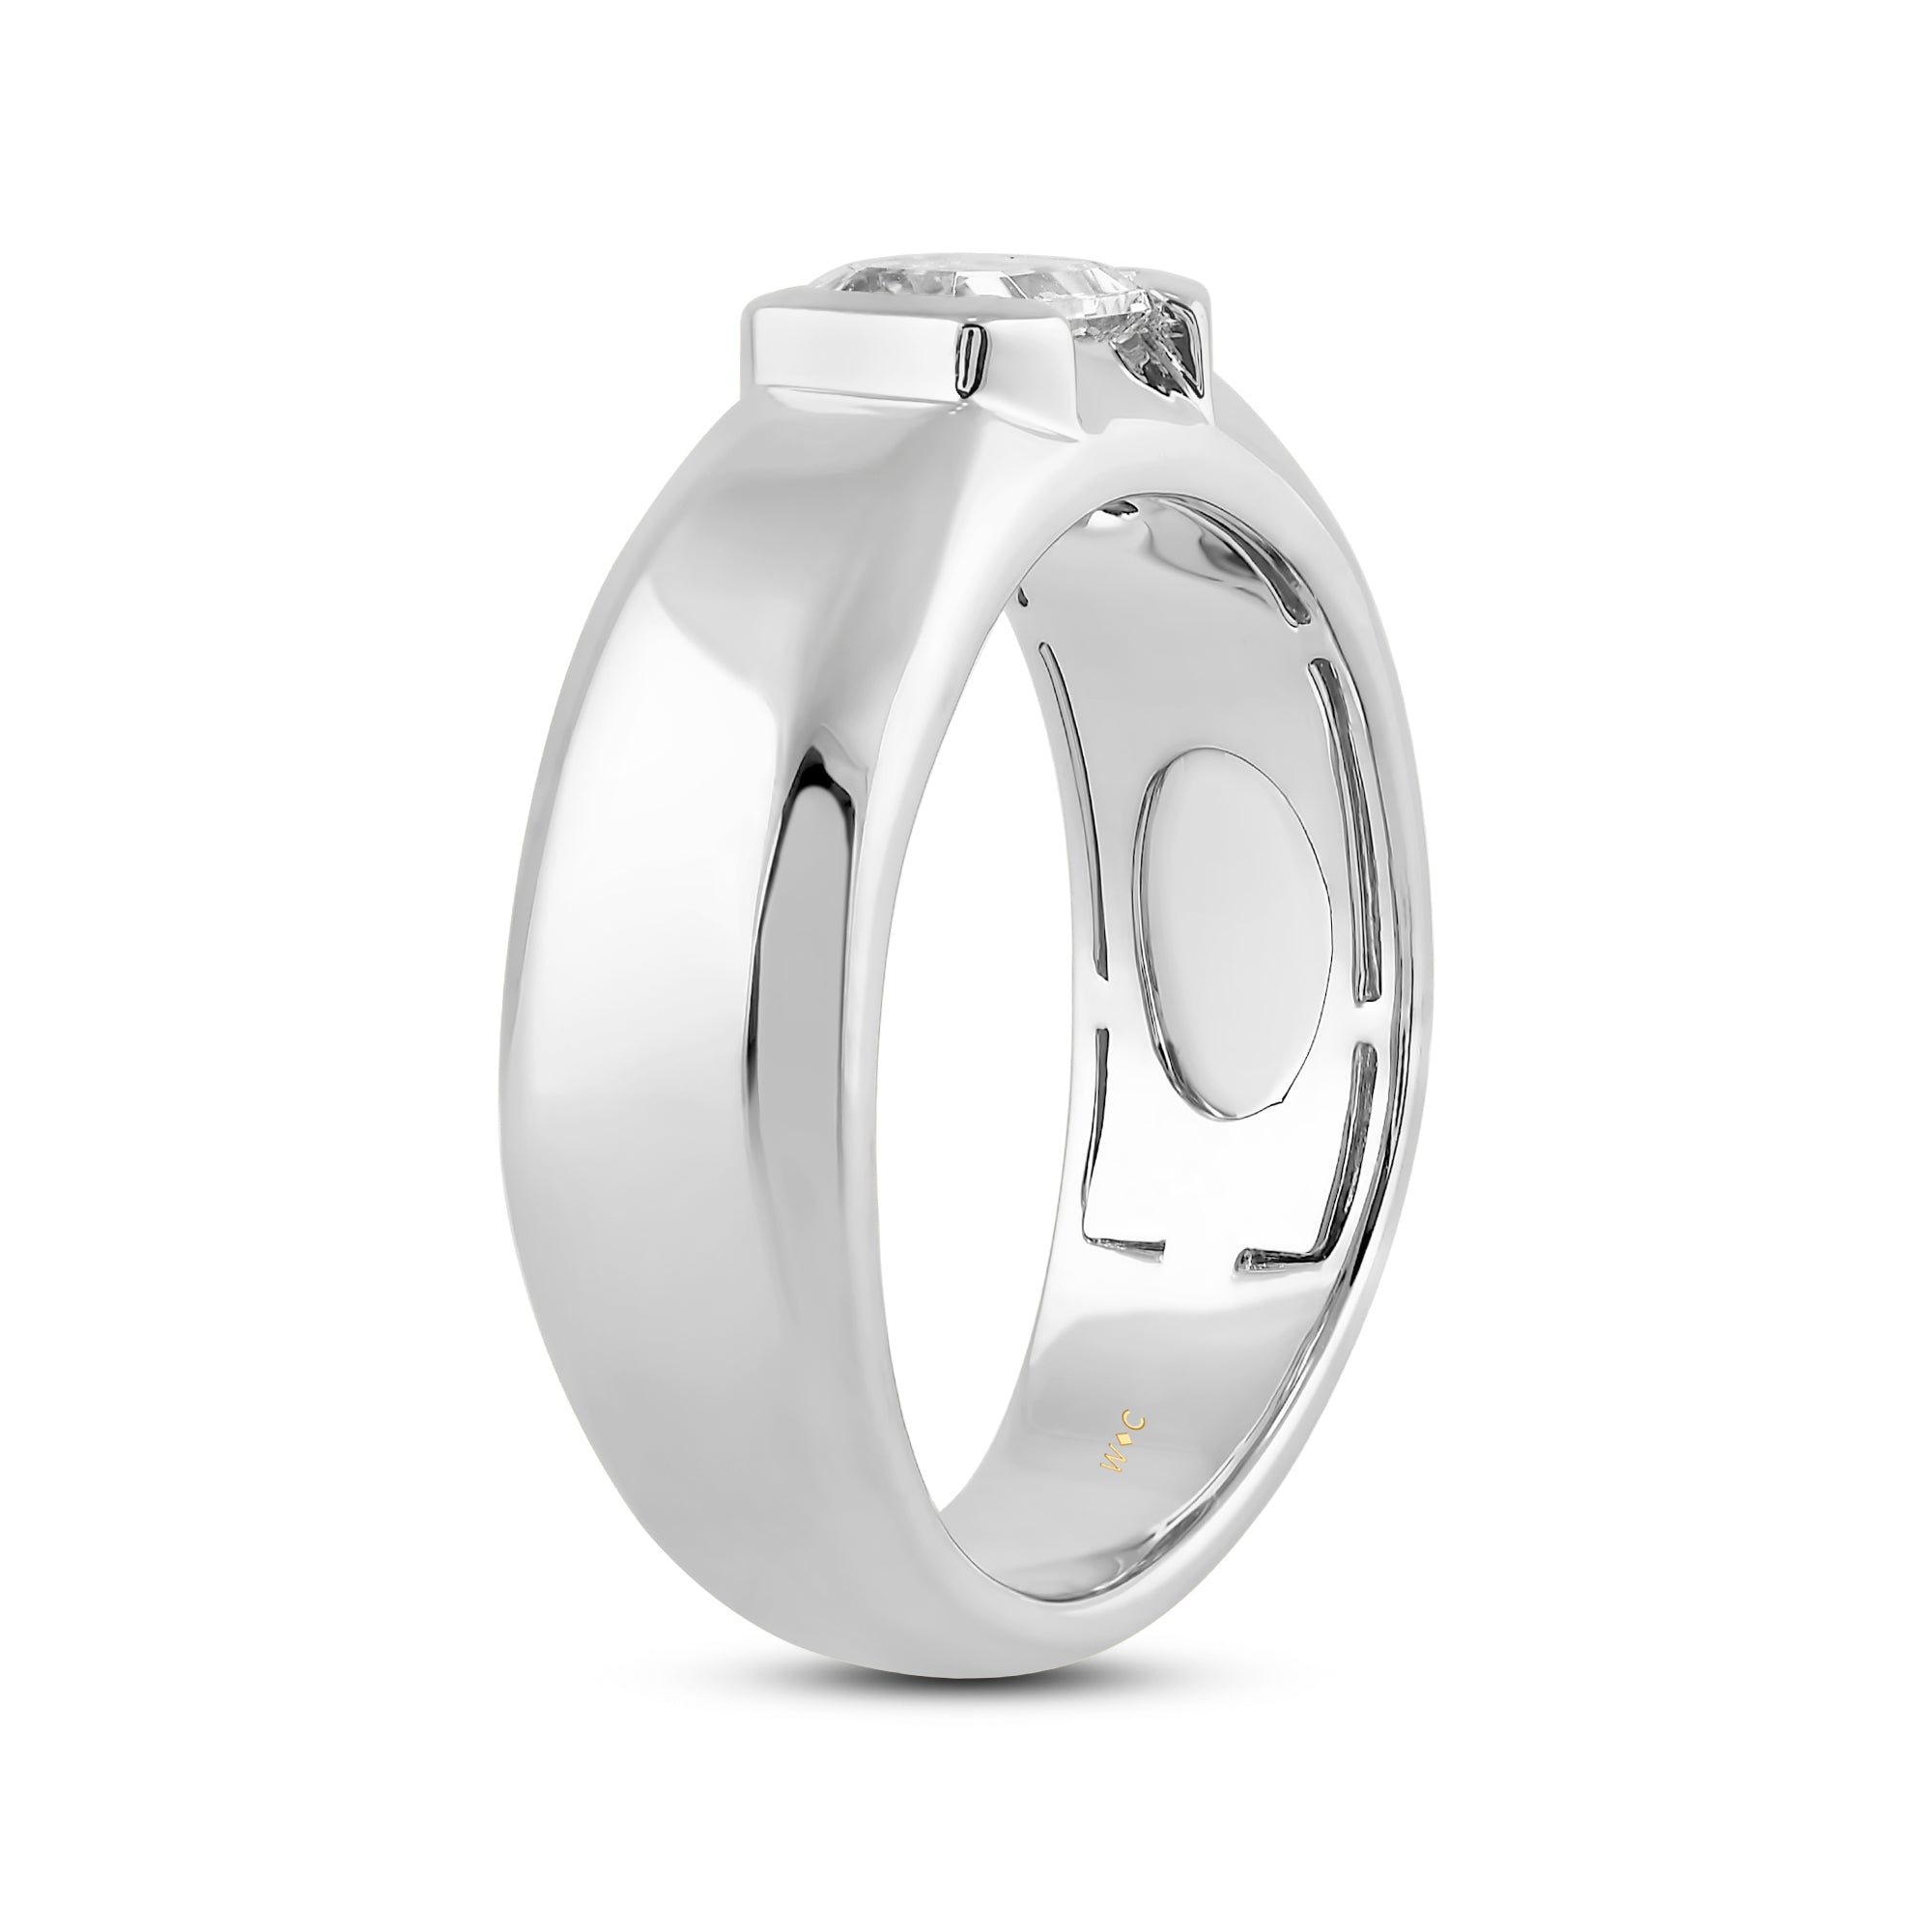 Premium AI Image | Gold ring setting prepared for a diamond